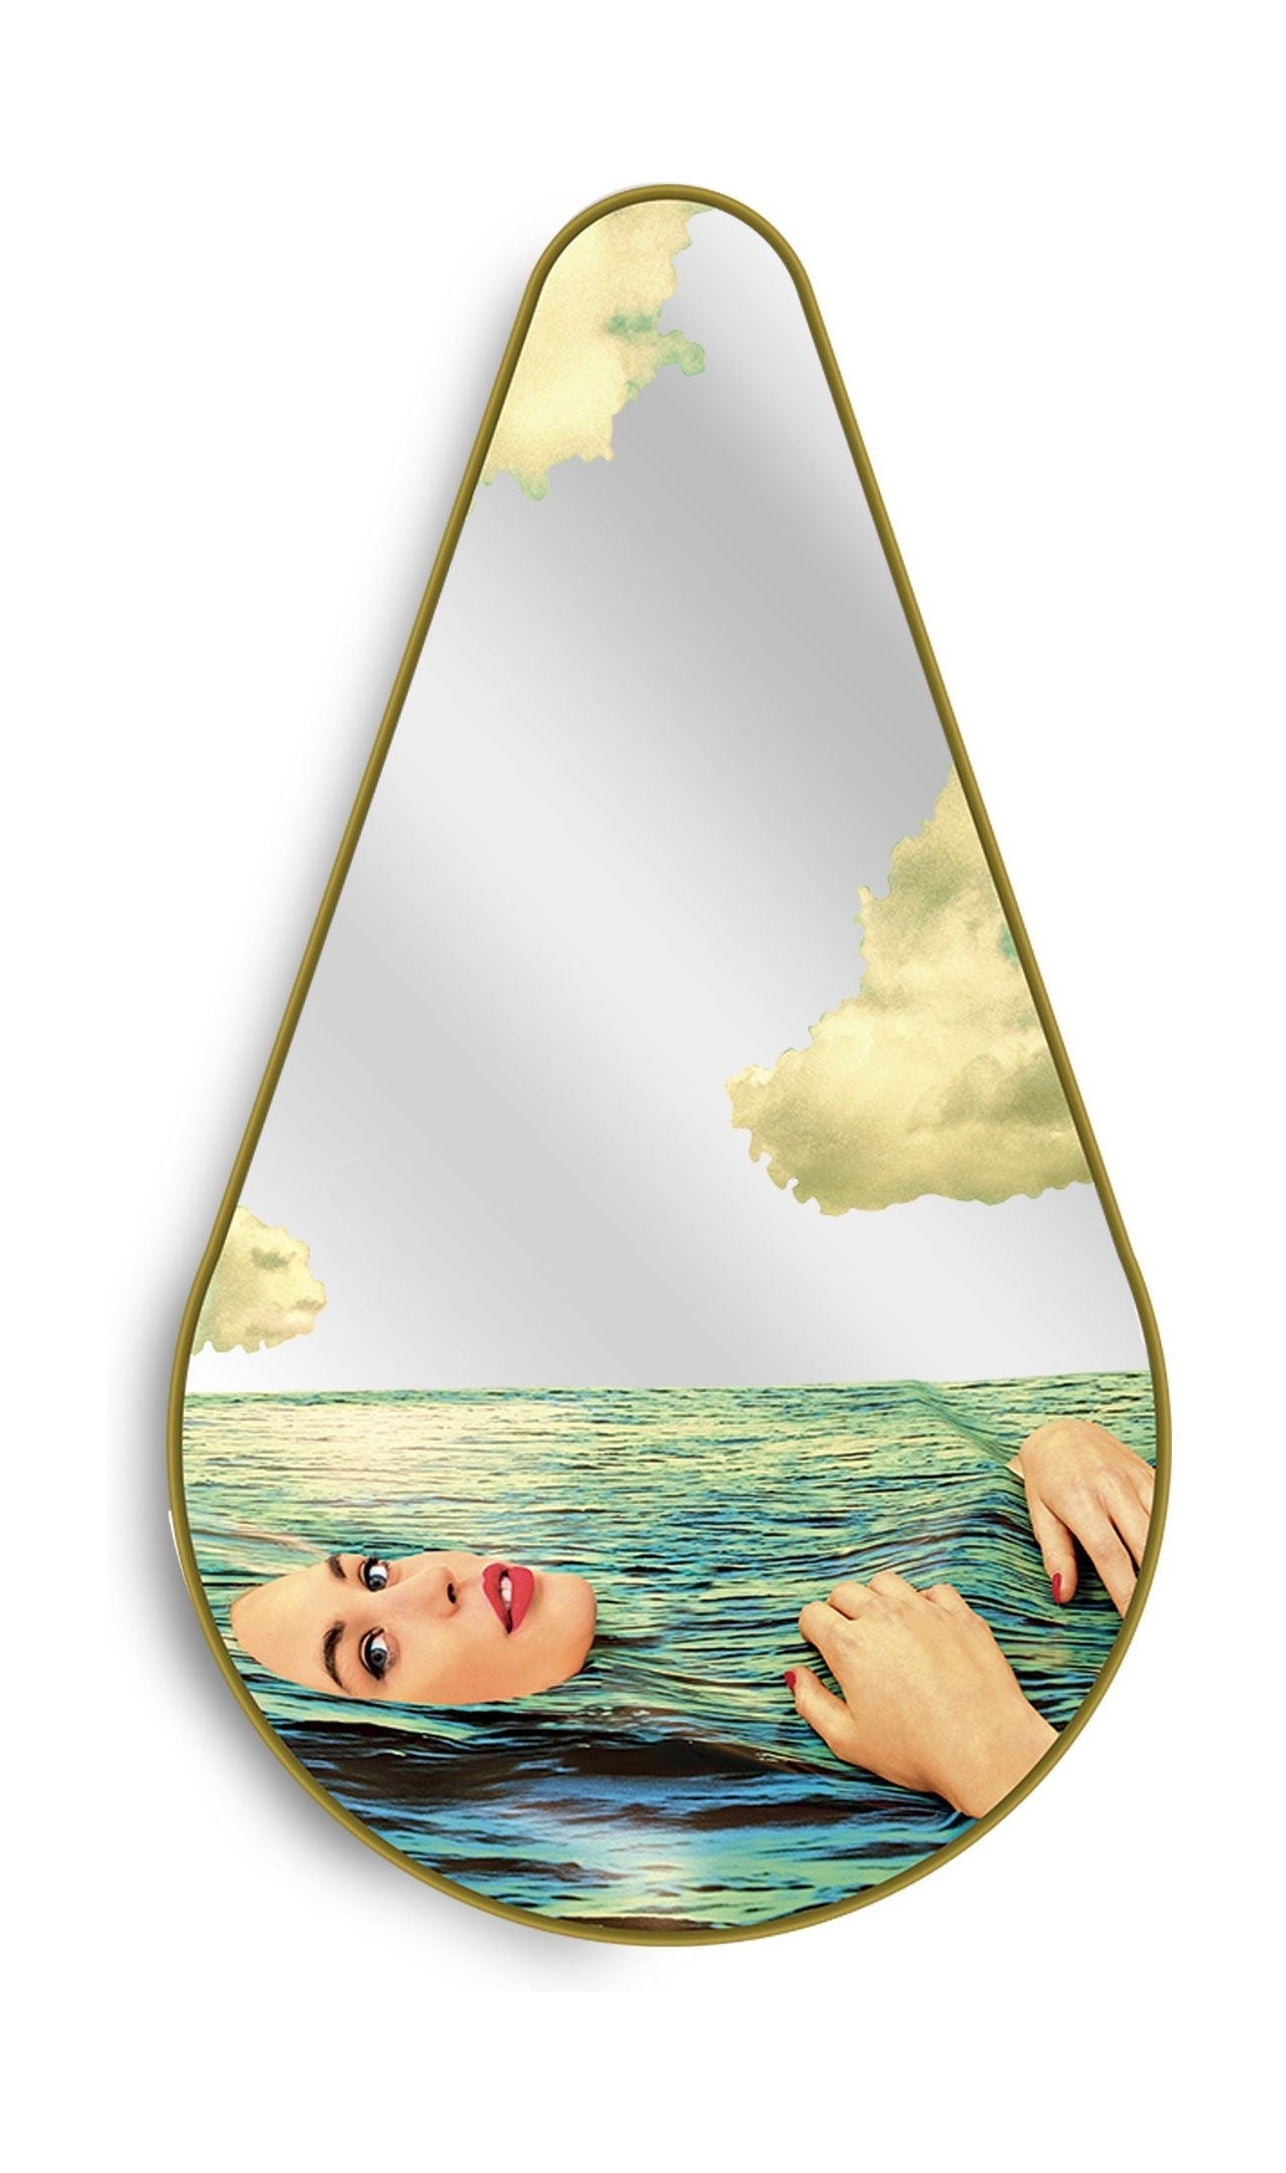 Seletti toalettpappers spegel guld ram päron, Seagirl